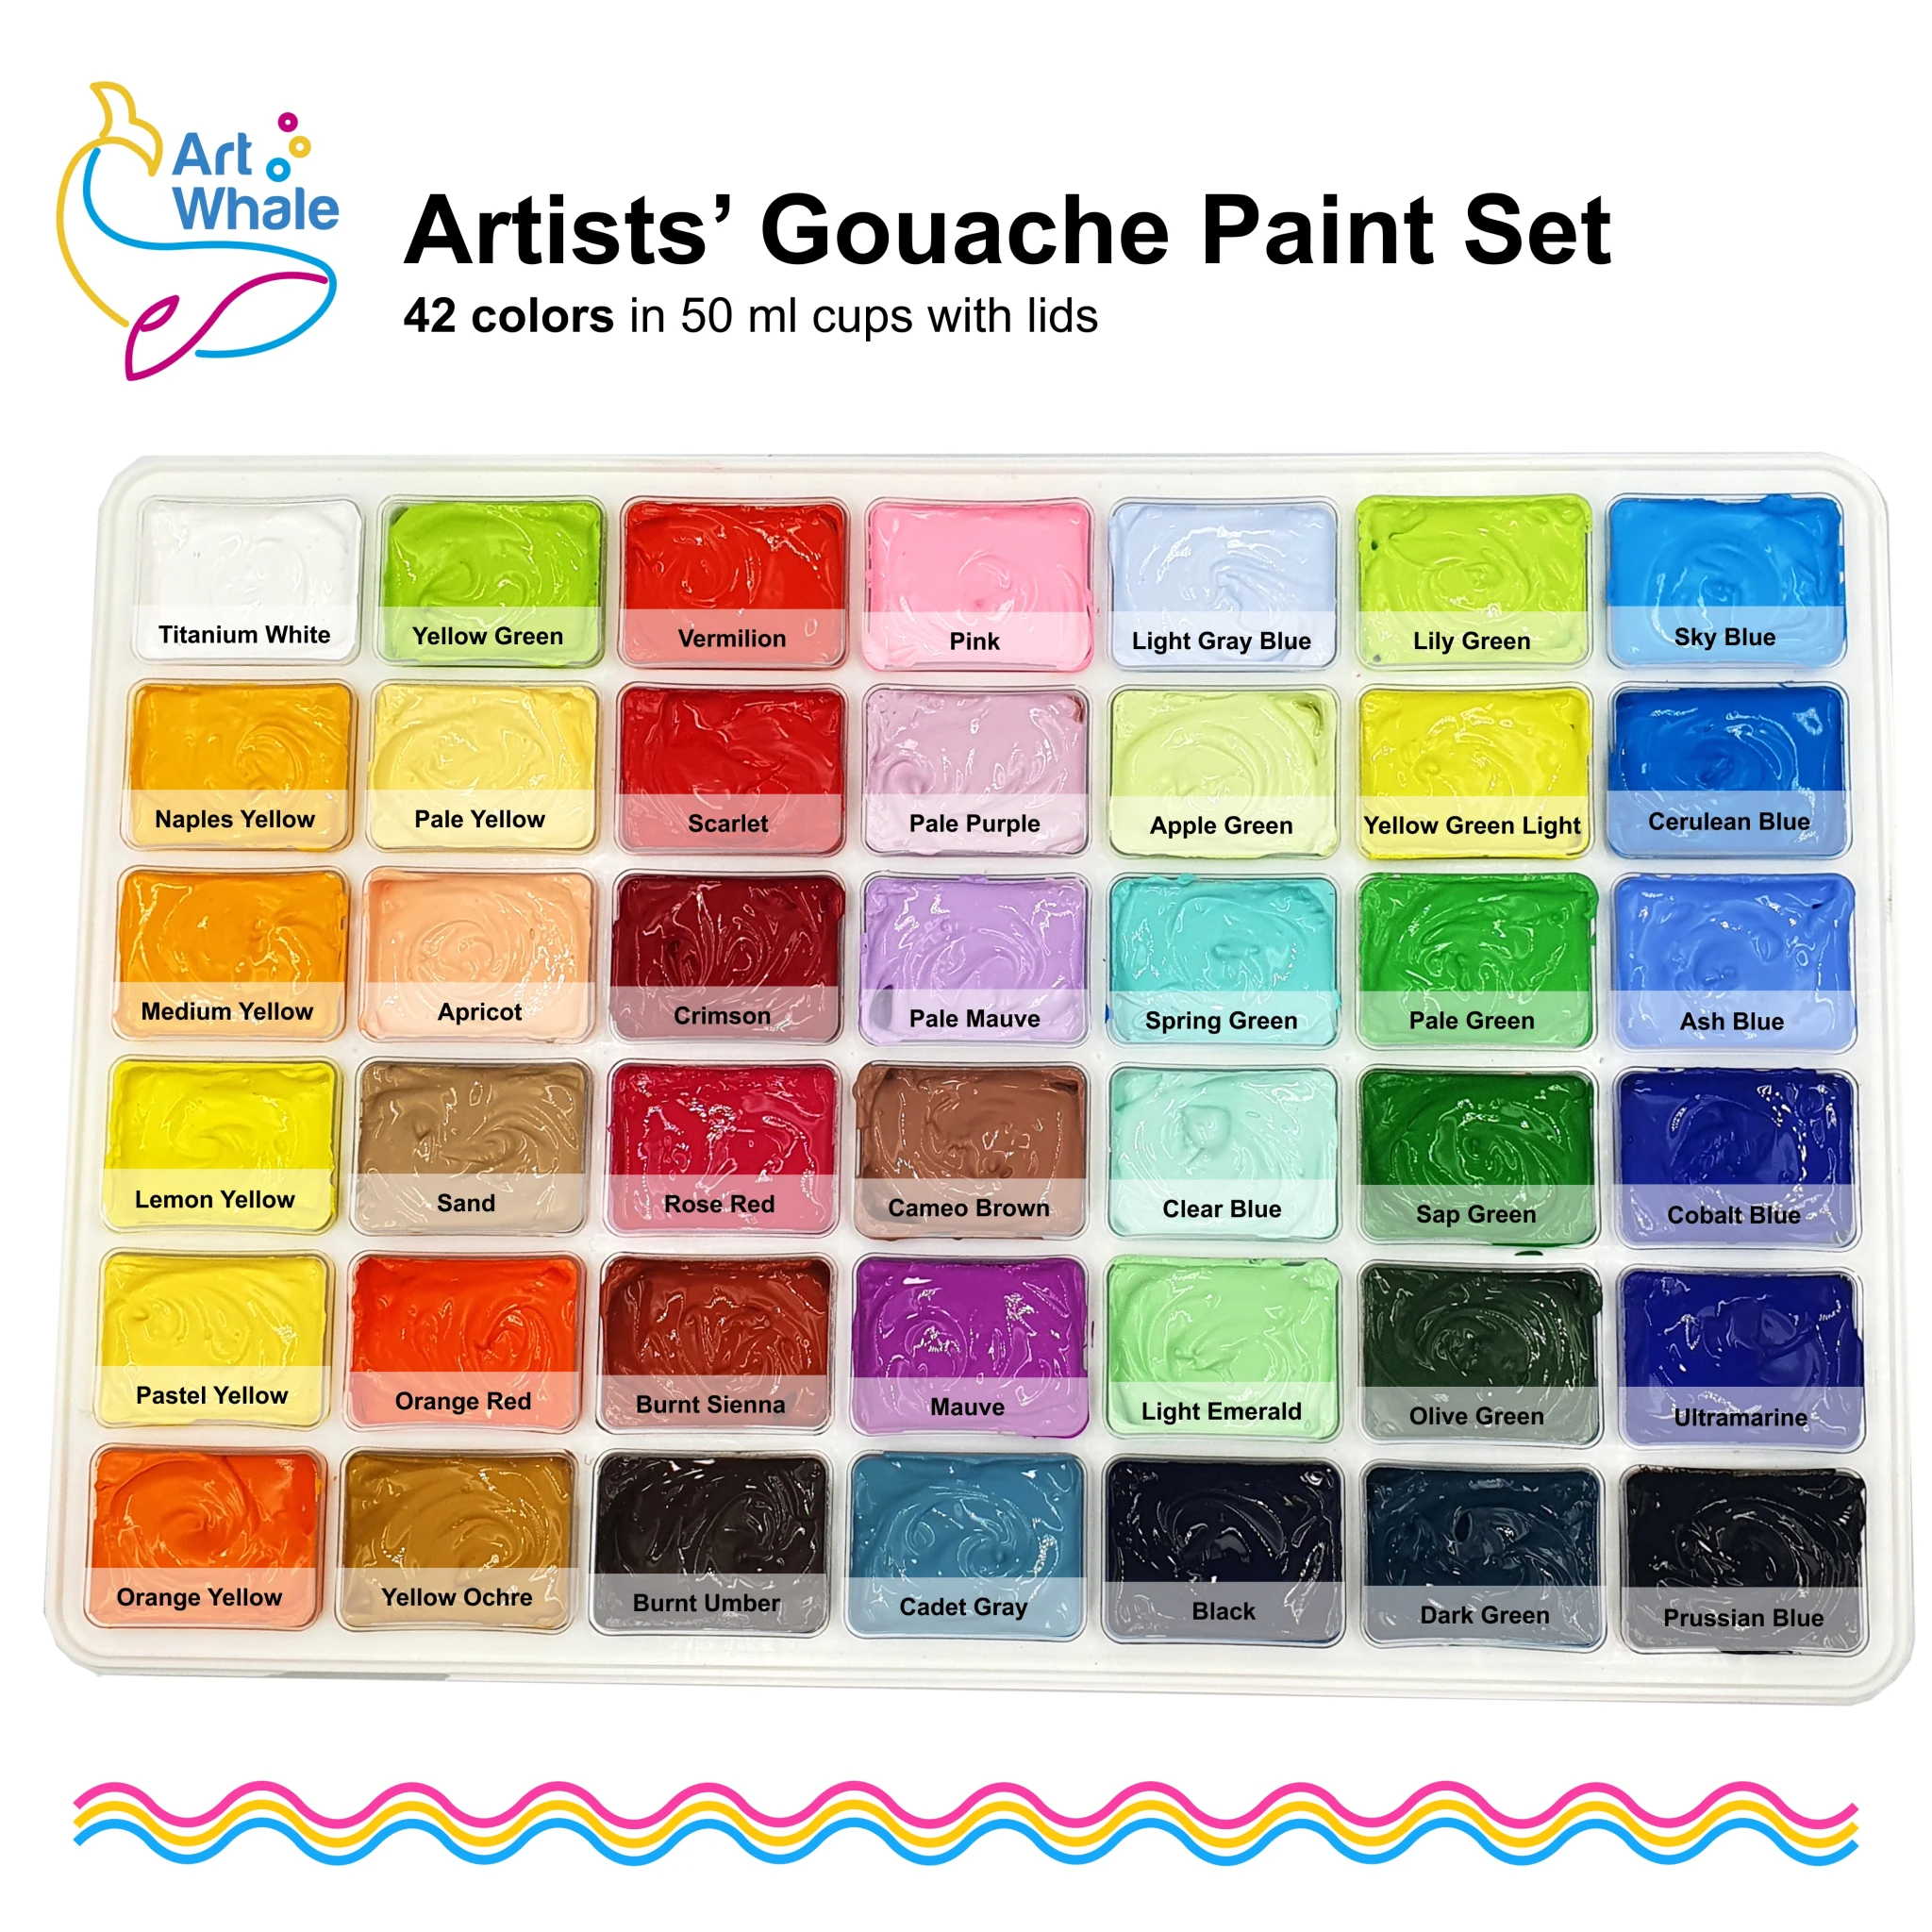 Art Whale Gouache Paint Set 42 Colors x 50 ml, 1.7 fl oz Cups With Lids in a Carrying Case